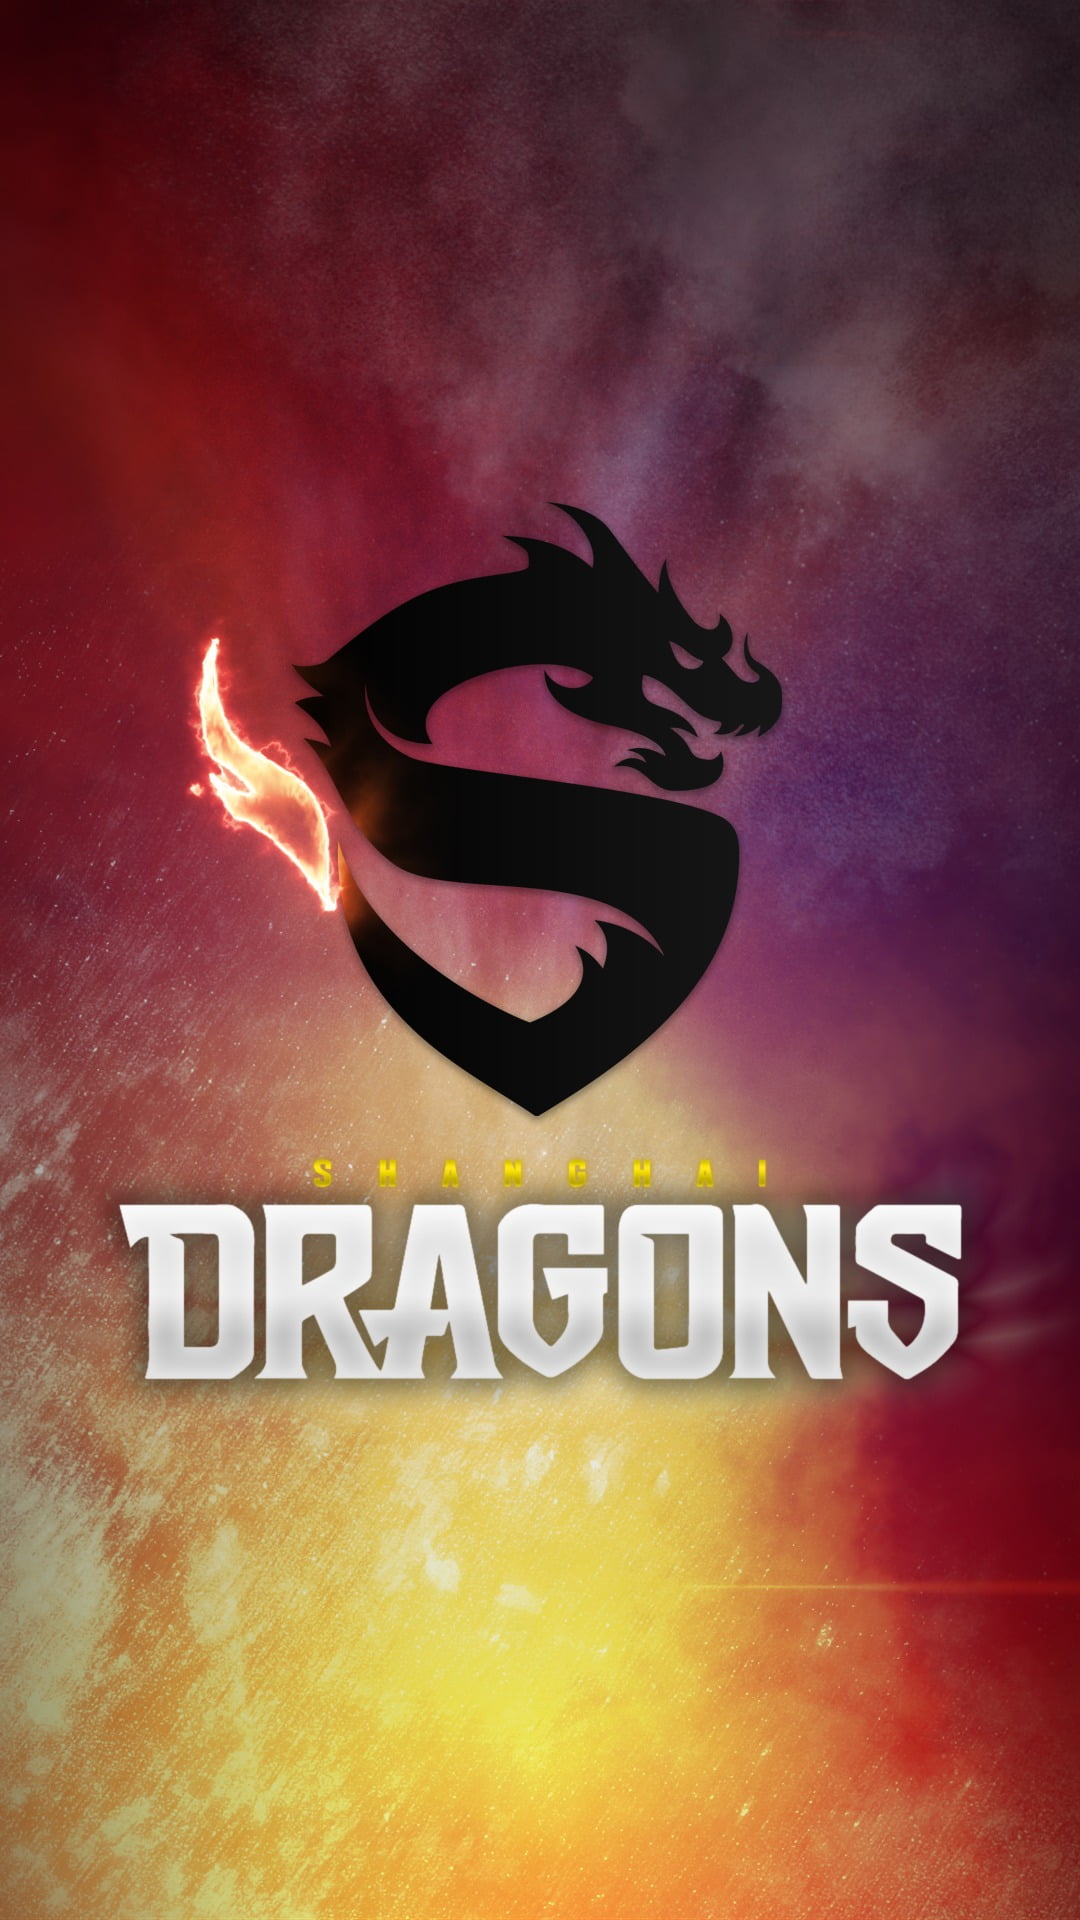 Overwatch, Overwatch League, e-sports, Shanghai Dragons, text